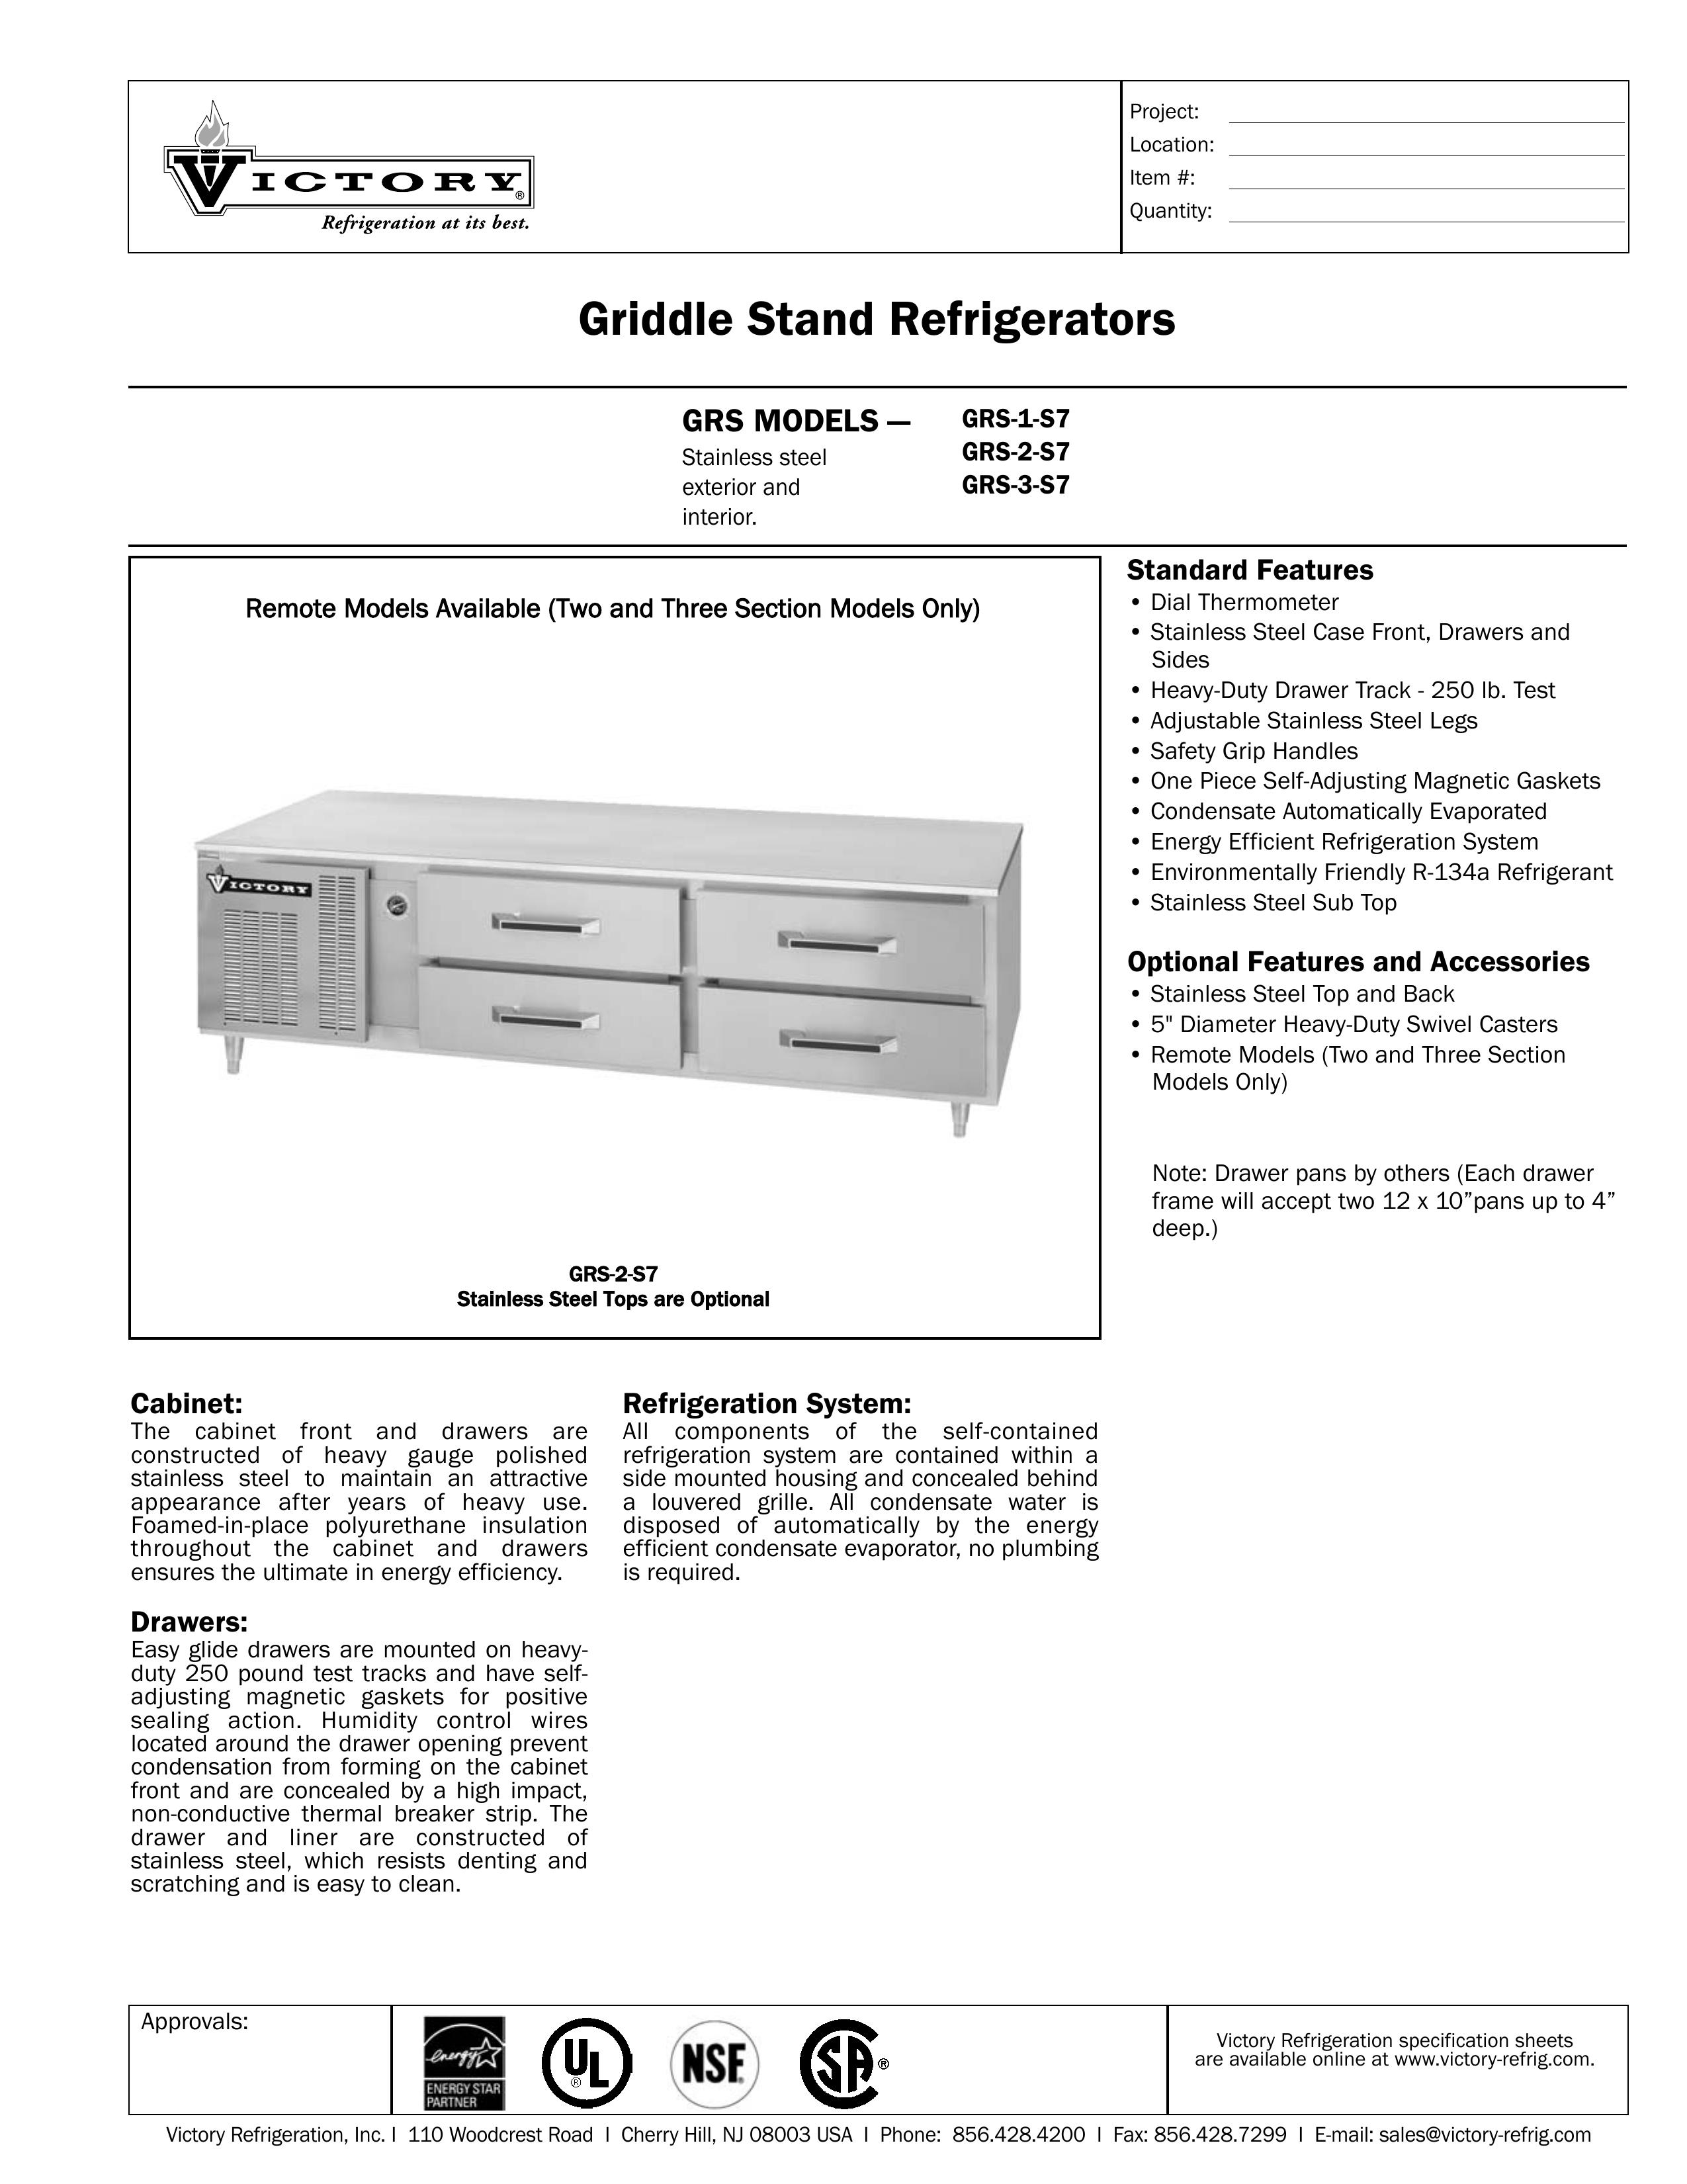 Victory Refrigeration GRS-3-S7 Refrigerator User Manual